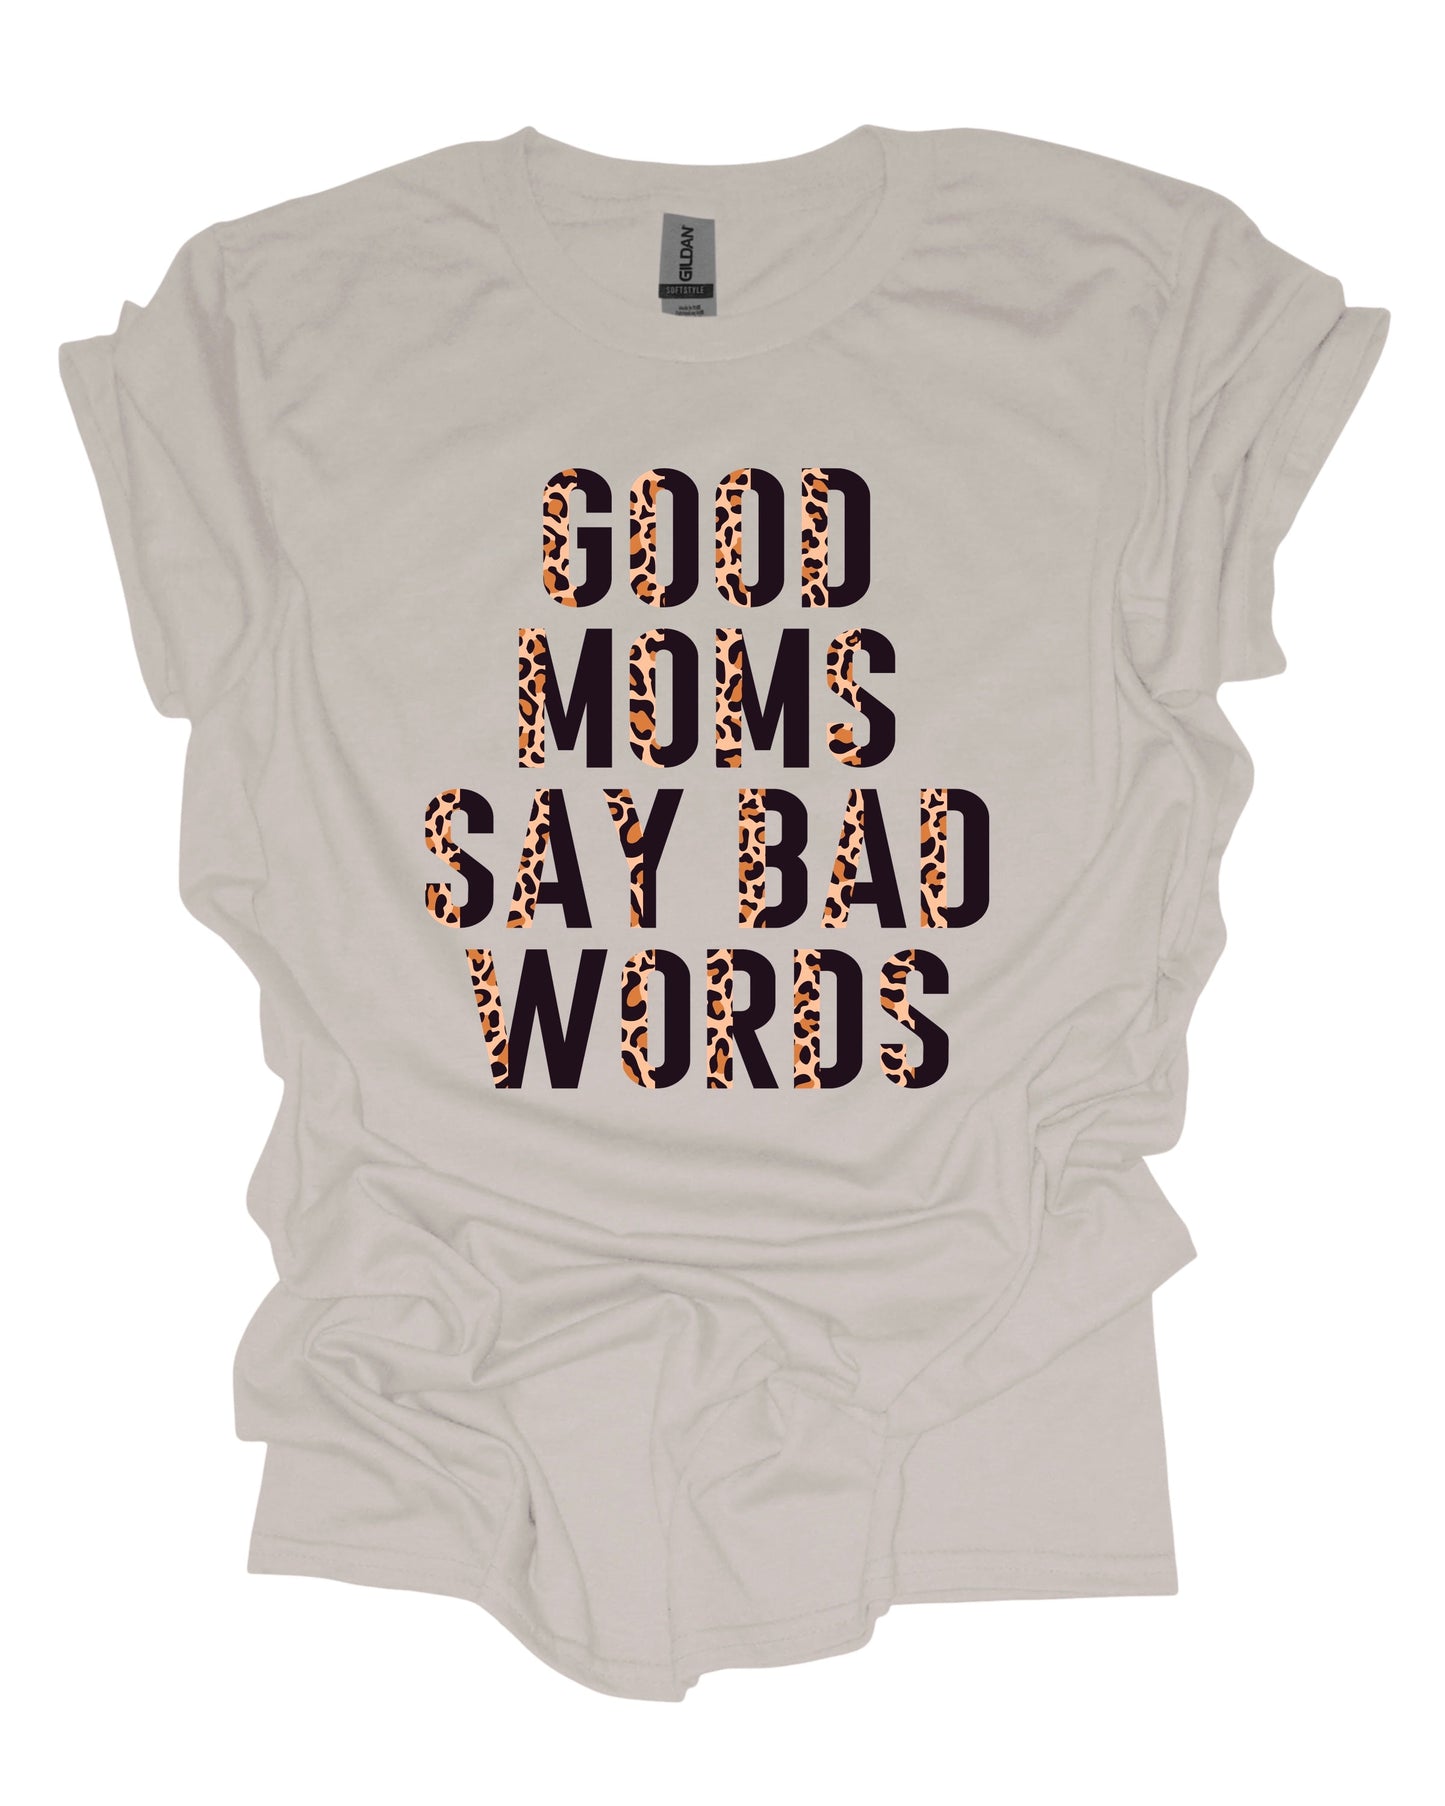 Good moms, bad words - T-Shirt